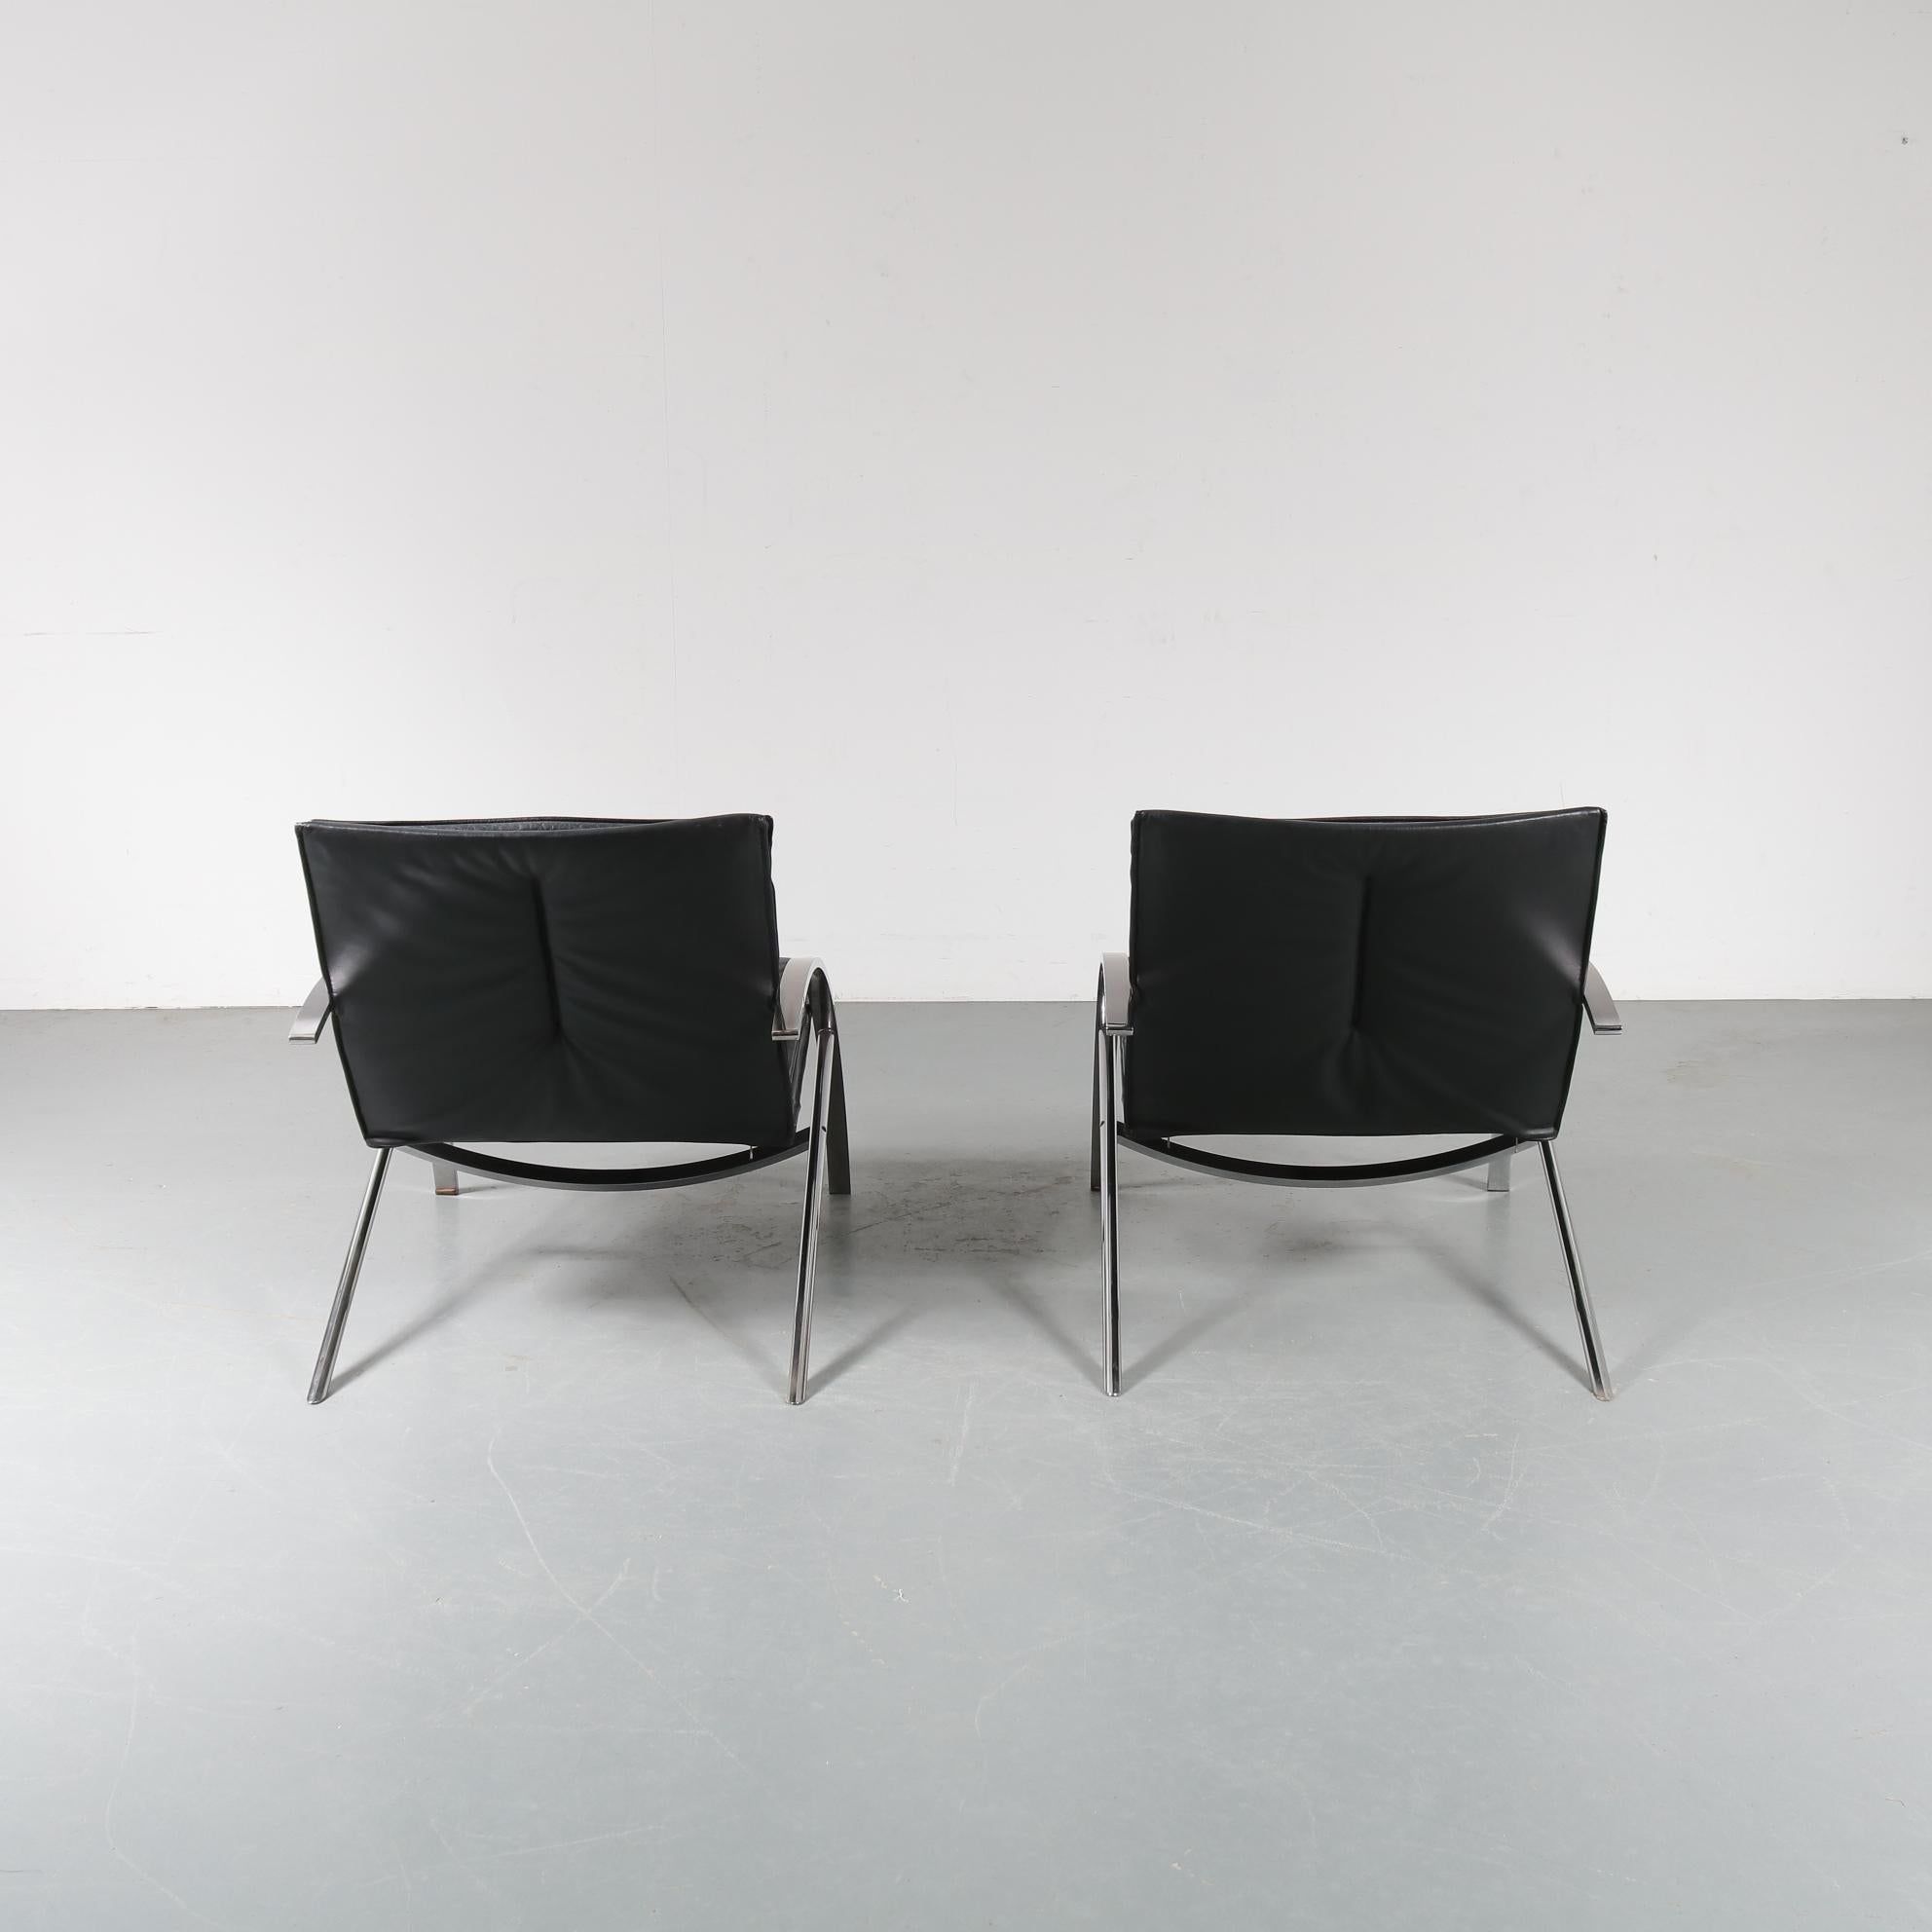 Swiss Paul Tuttle “Arco” Chairs for Strässle, Switzerland, 1976